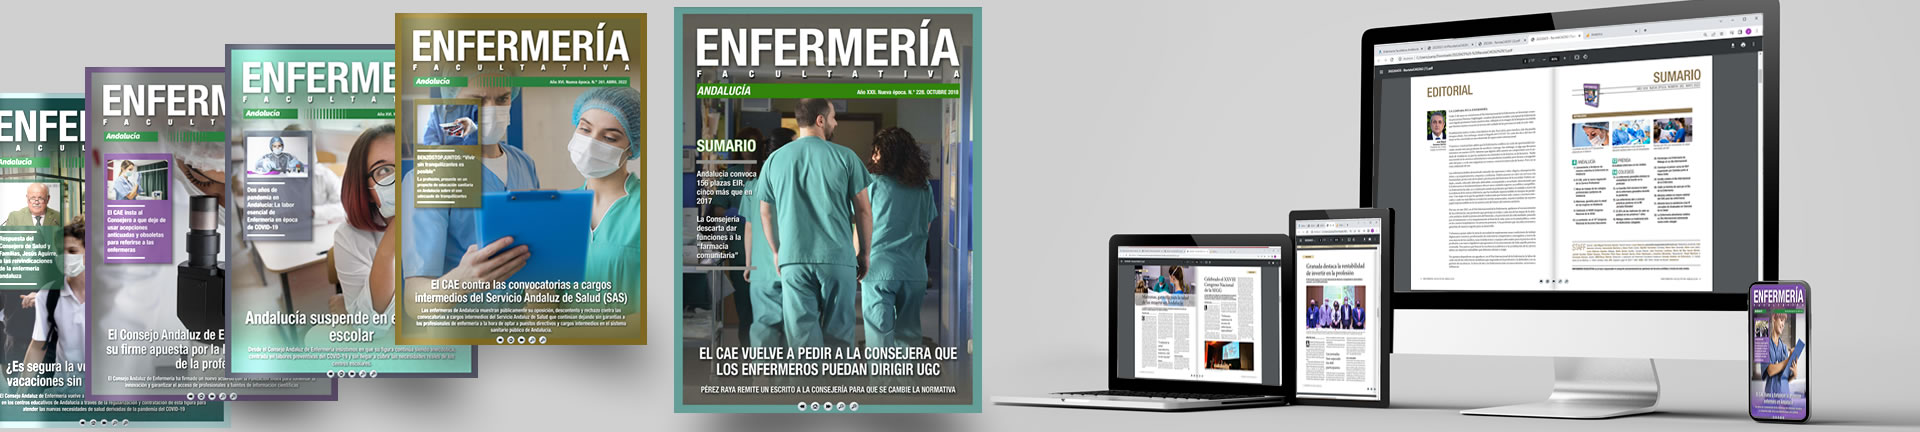 Consejo Andaluz de Colegios de Enfermería - CAE - Revista Enfermería Facultativa número 228 - Edición Andalucía